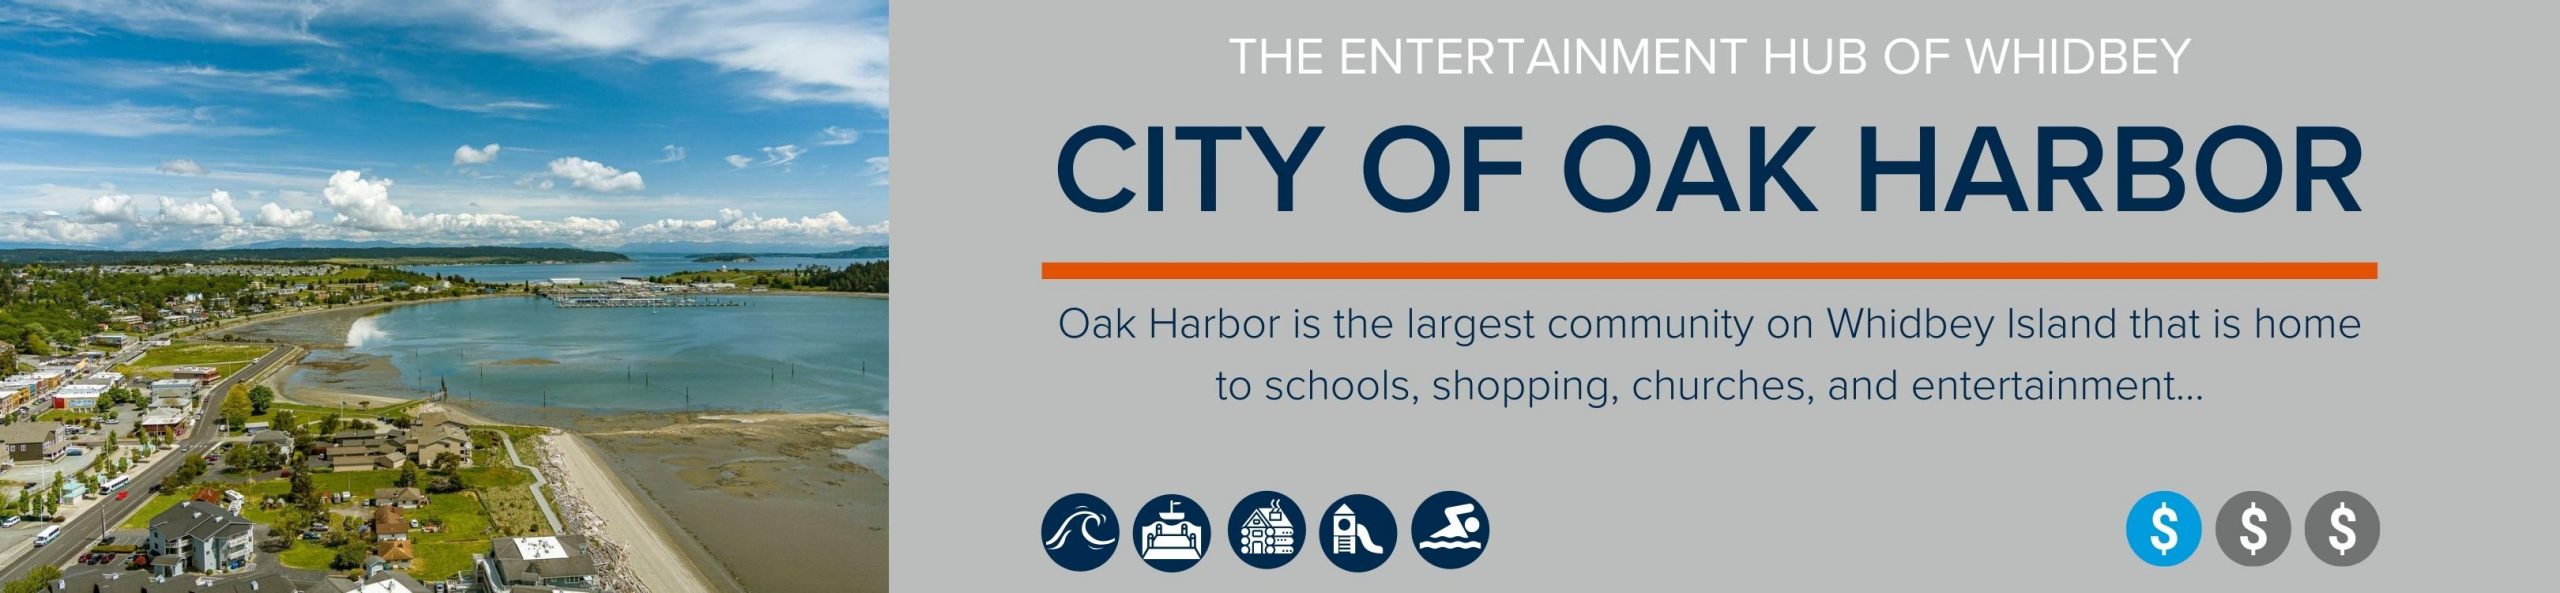 City of Oak Harbor